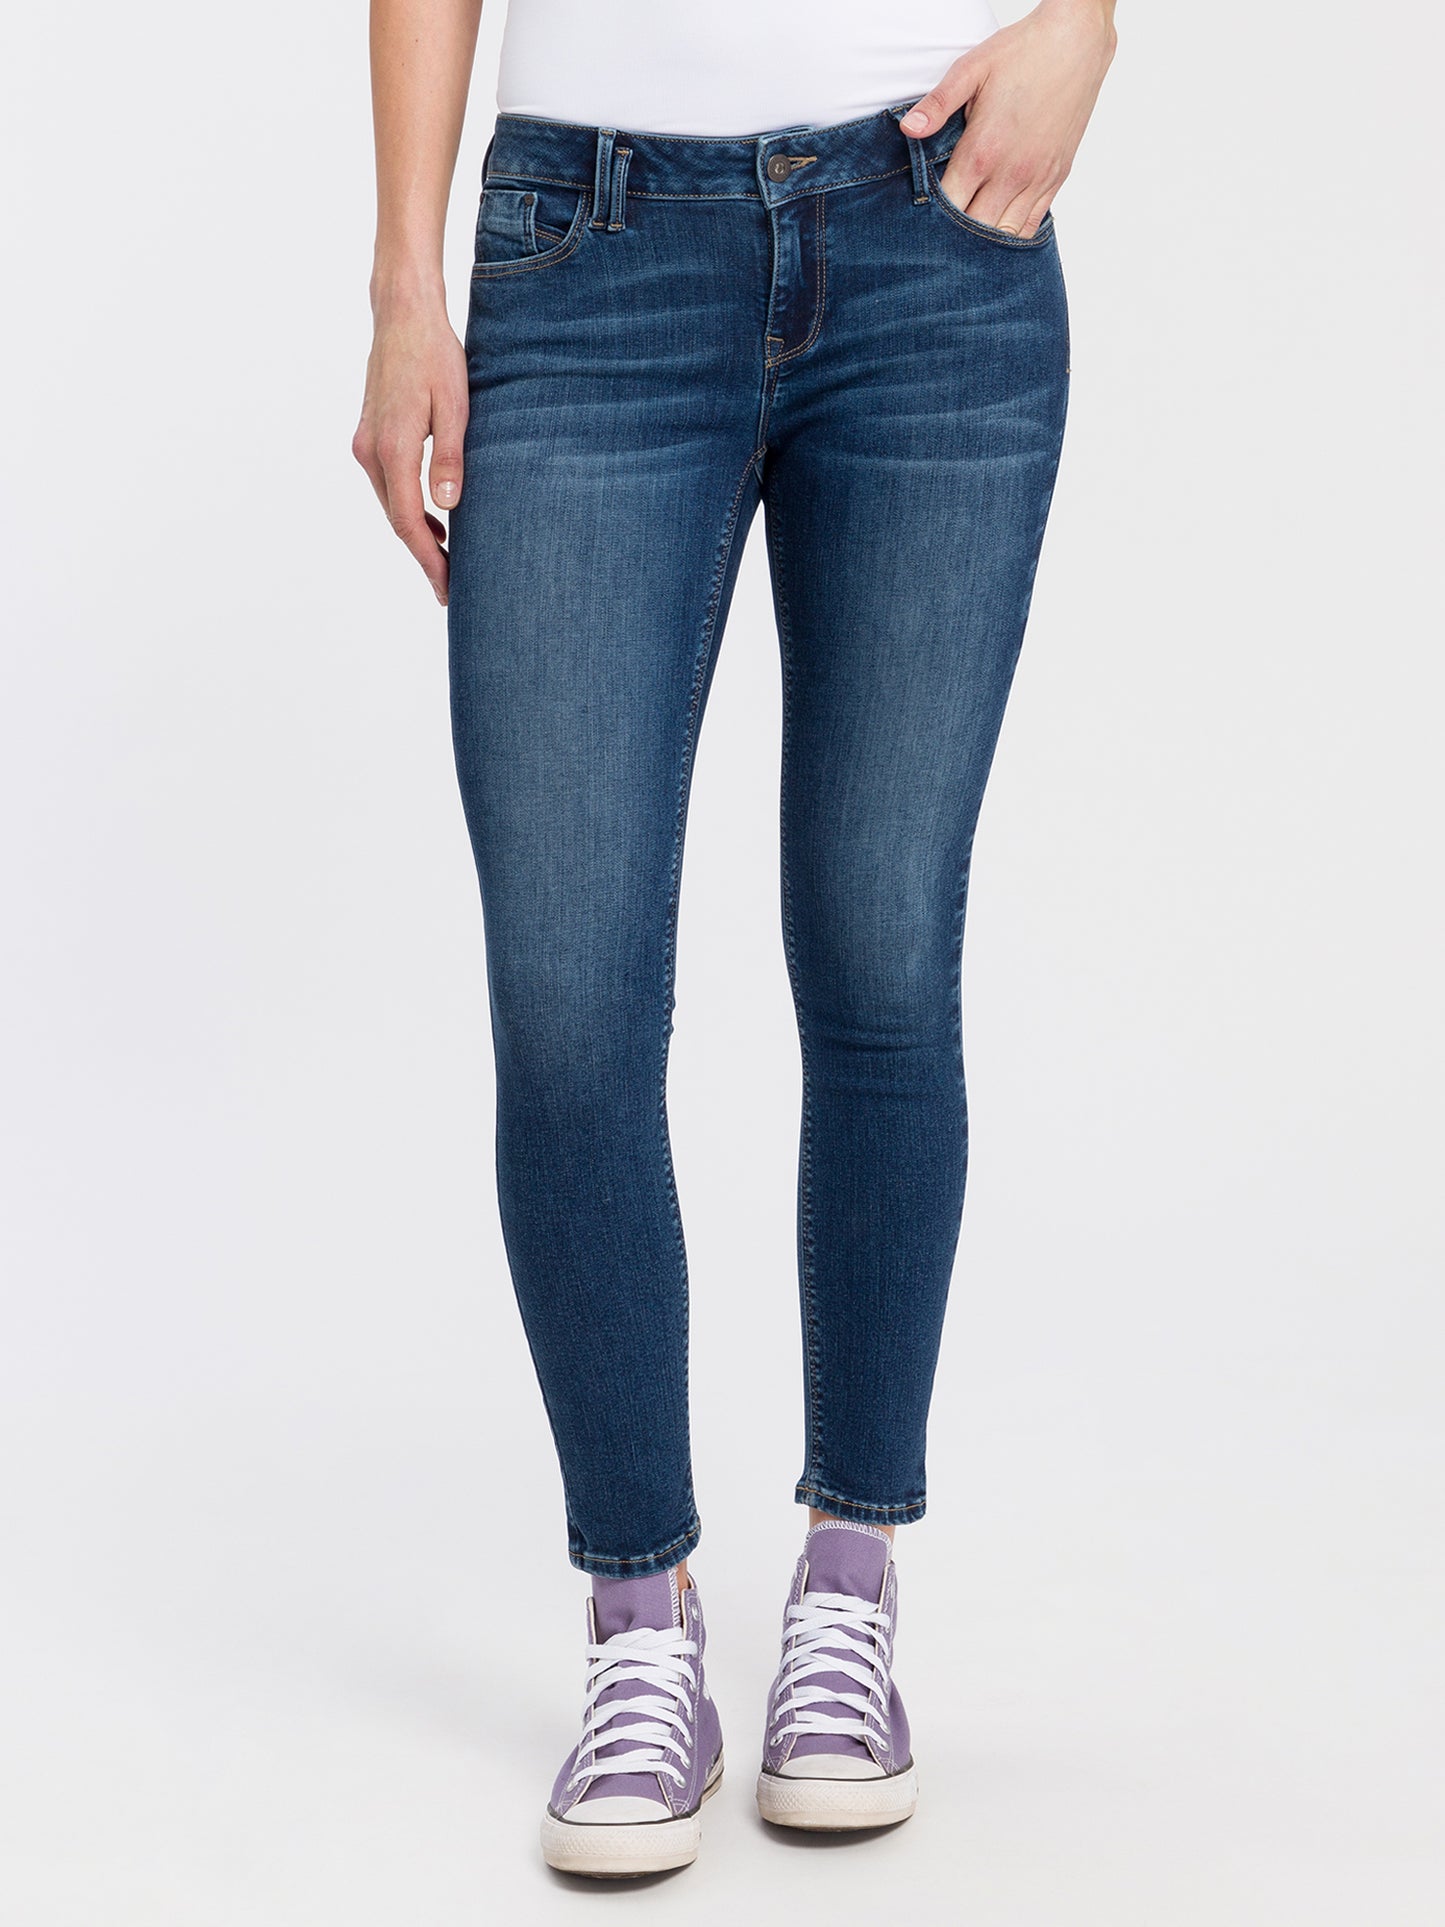 Giselle Damen Jeans Super Skinny Fit Mid Waist Ankle Lenght dunkelblau